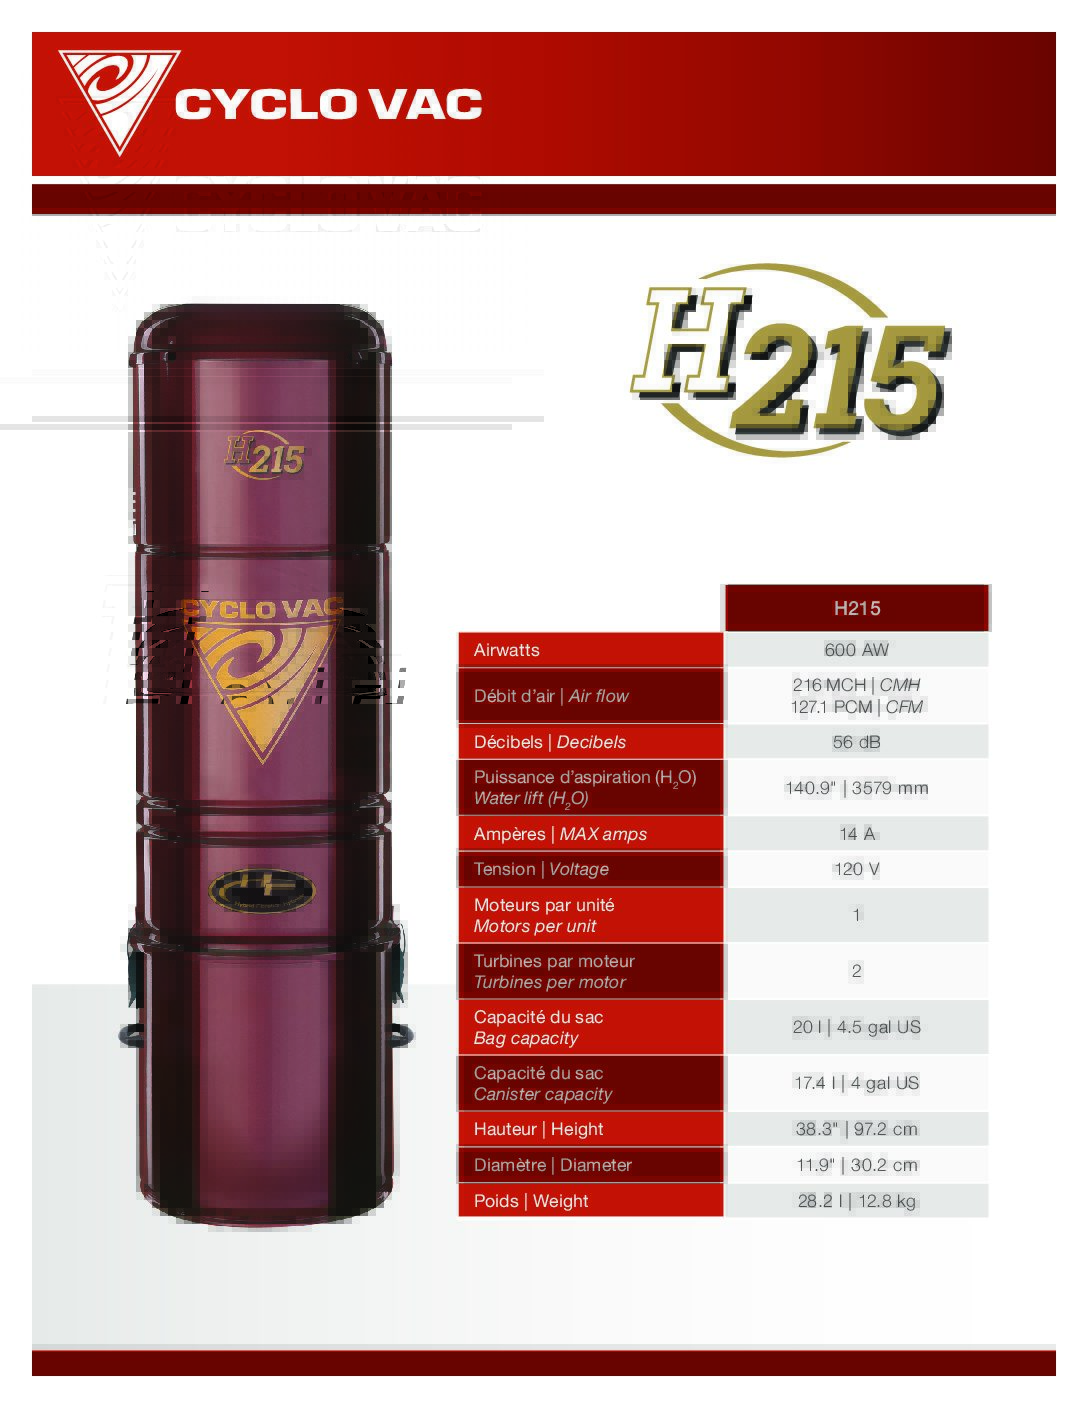 Cyclovac H215 Central Vacuum